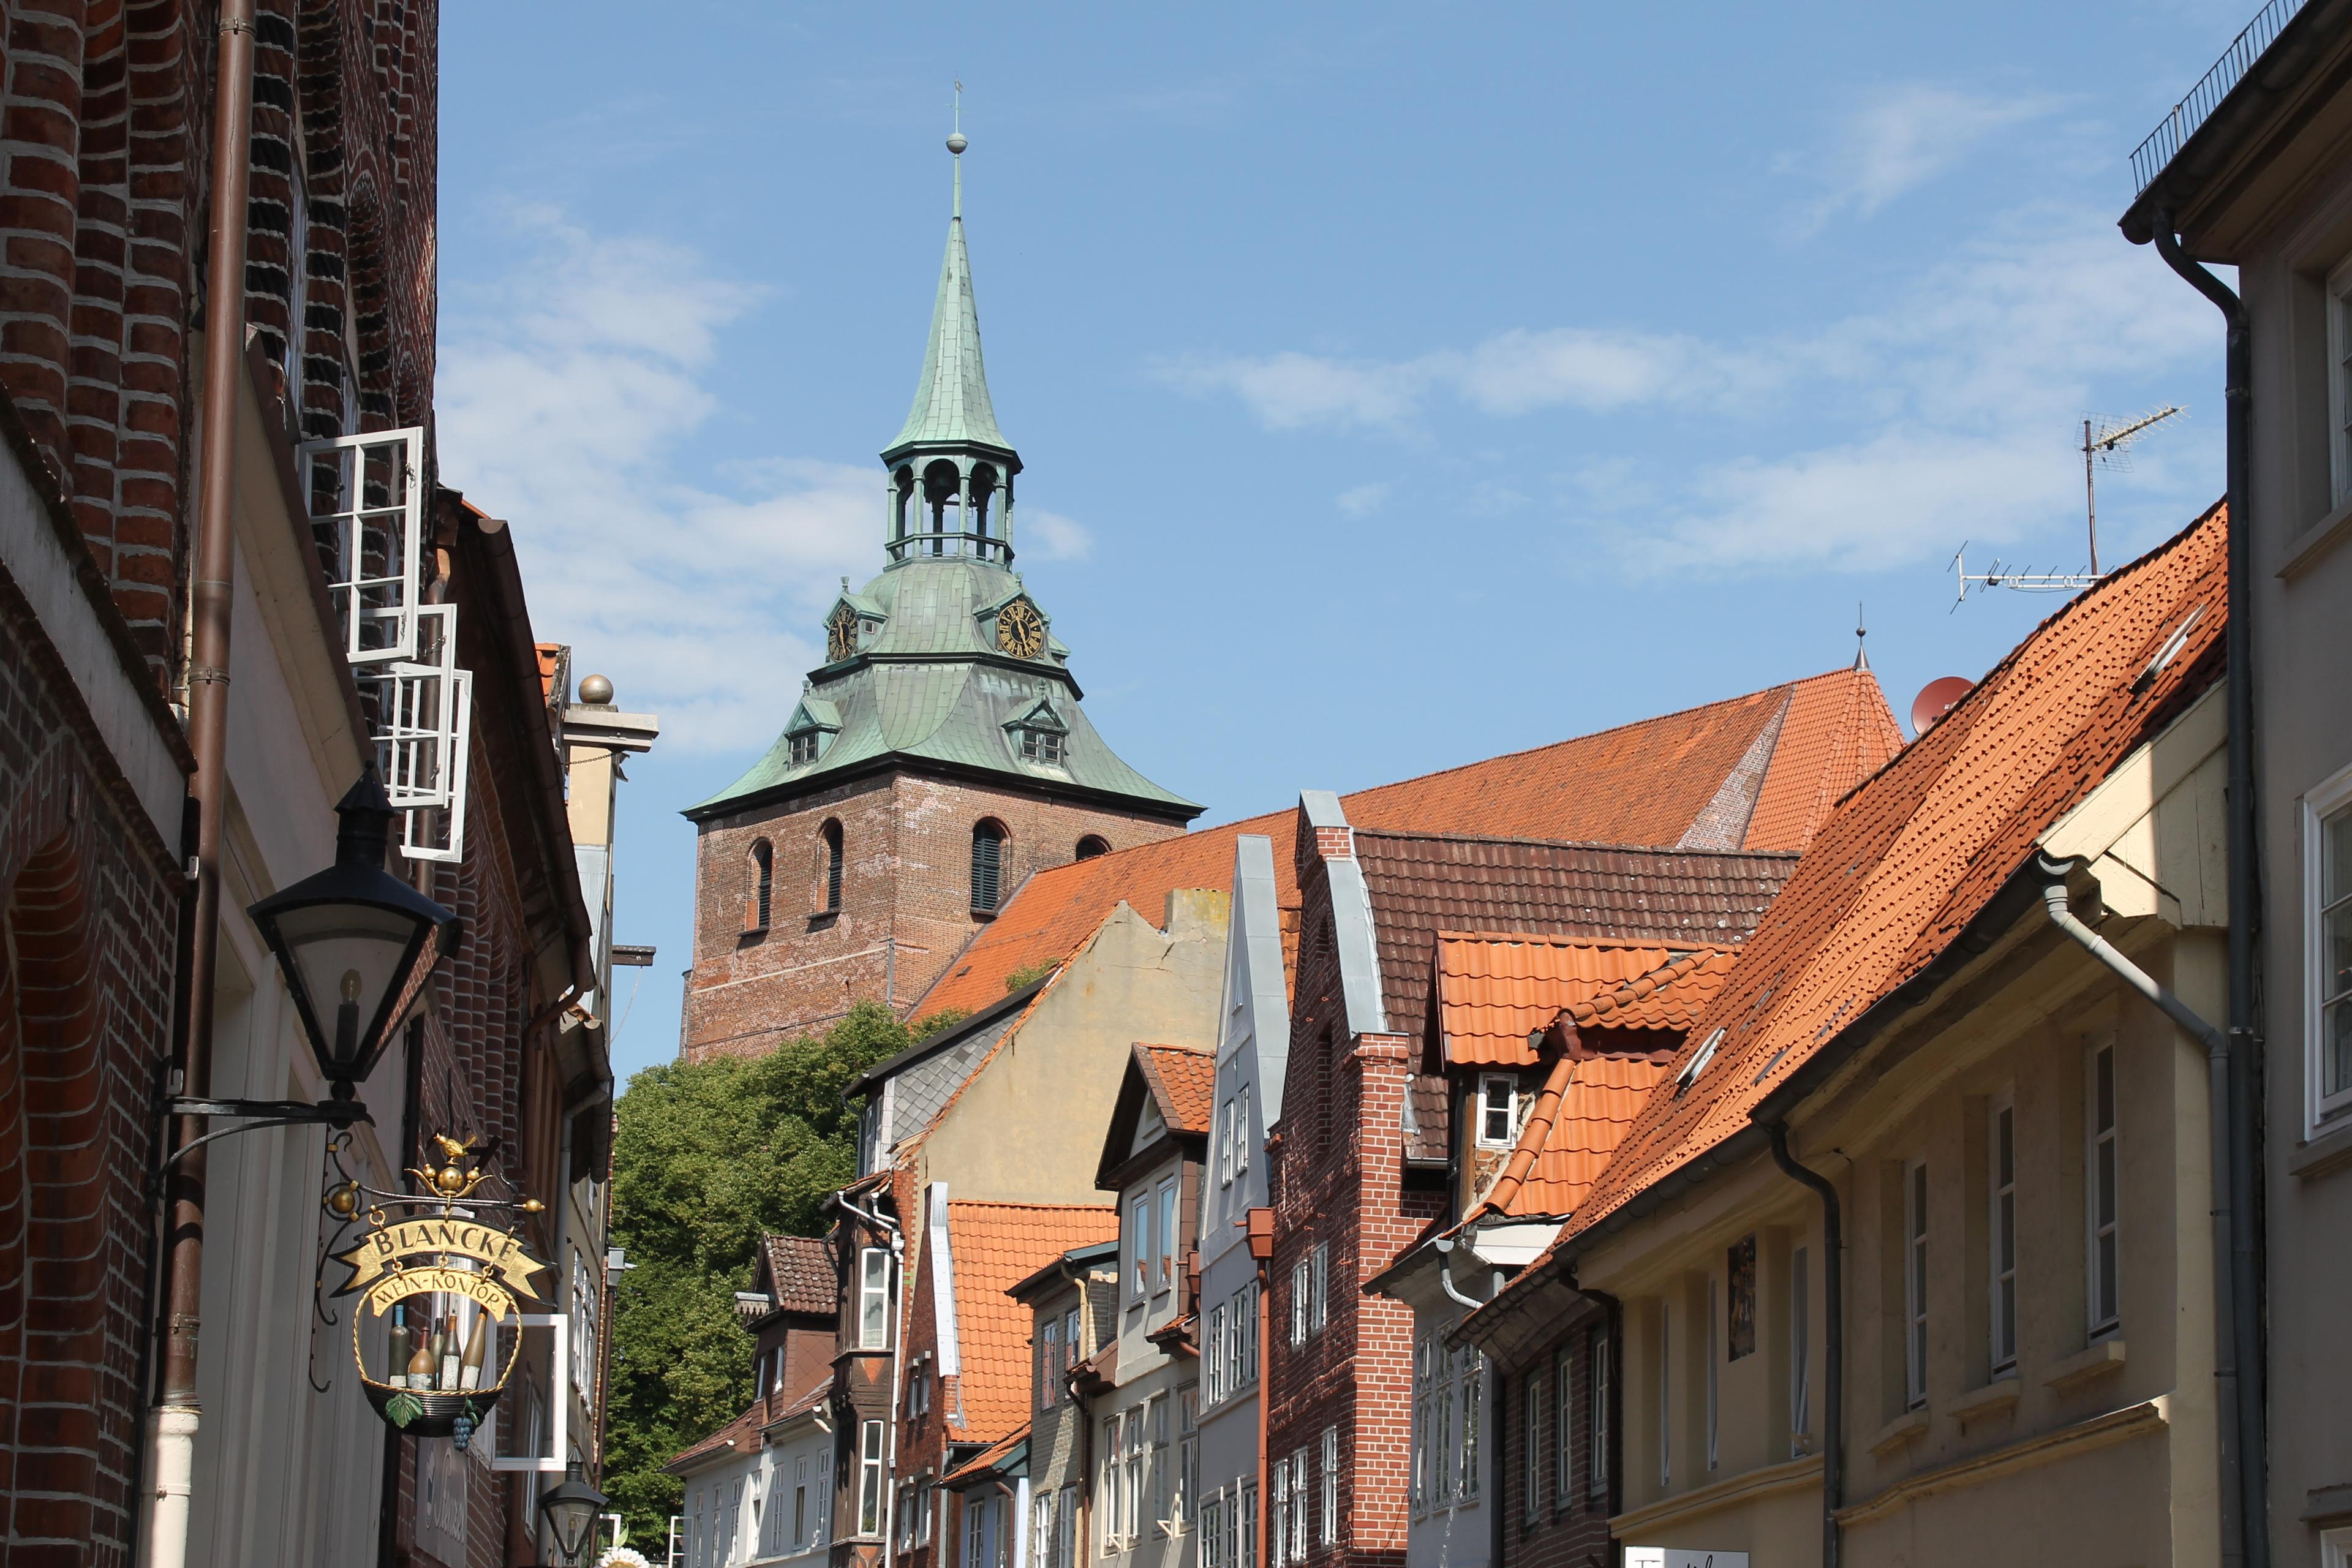 My personal highlights of Lüneburg